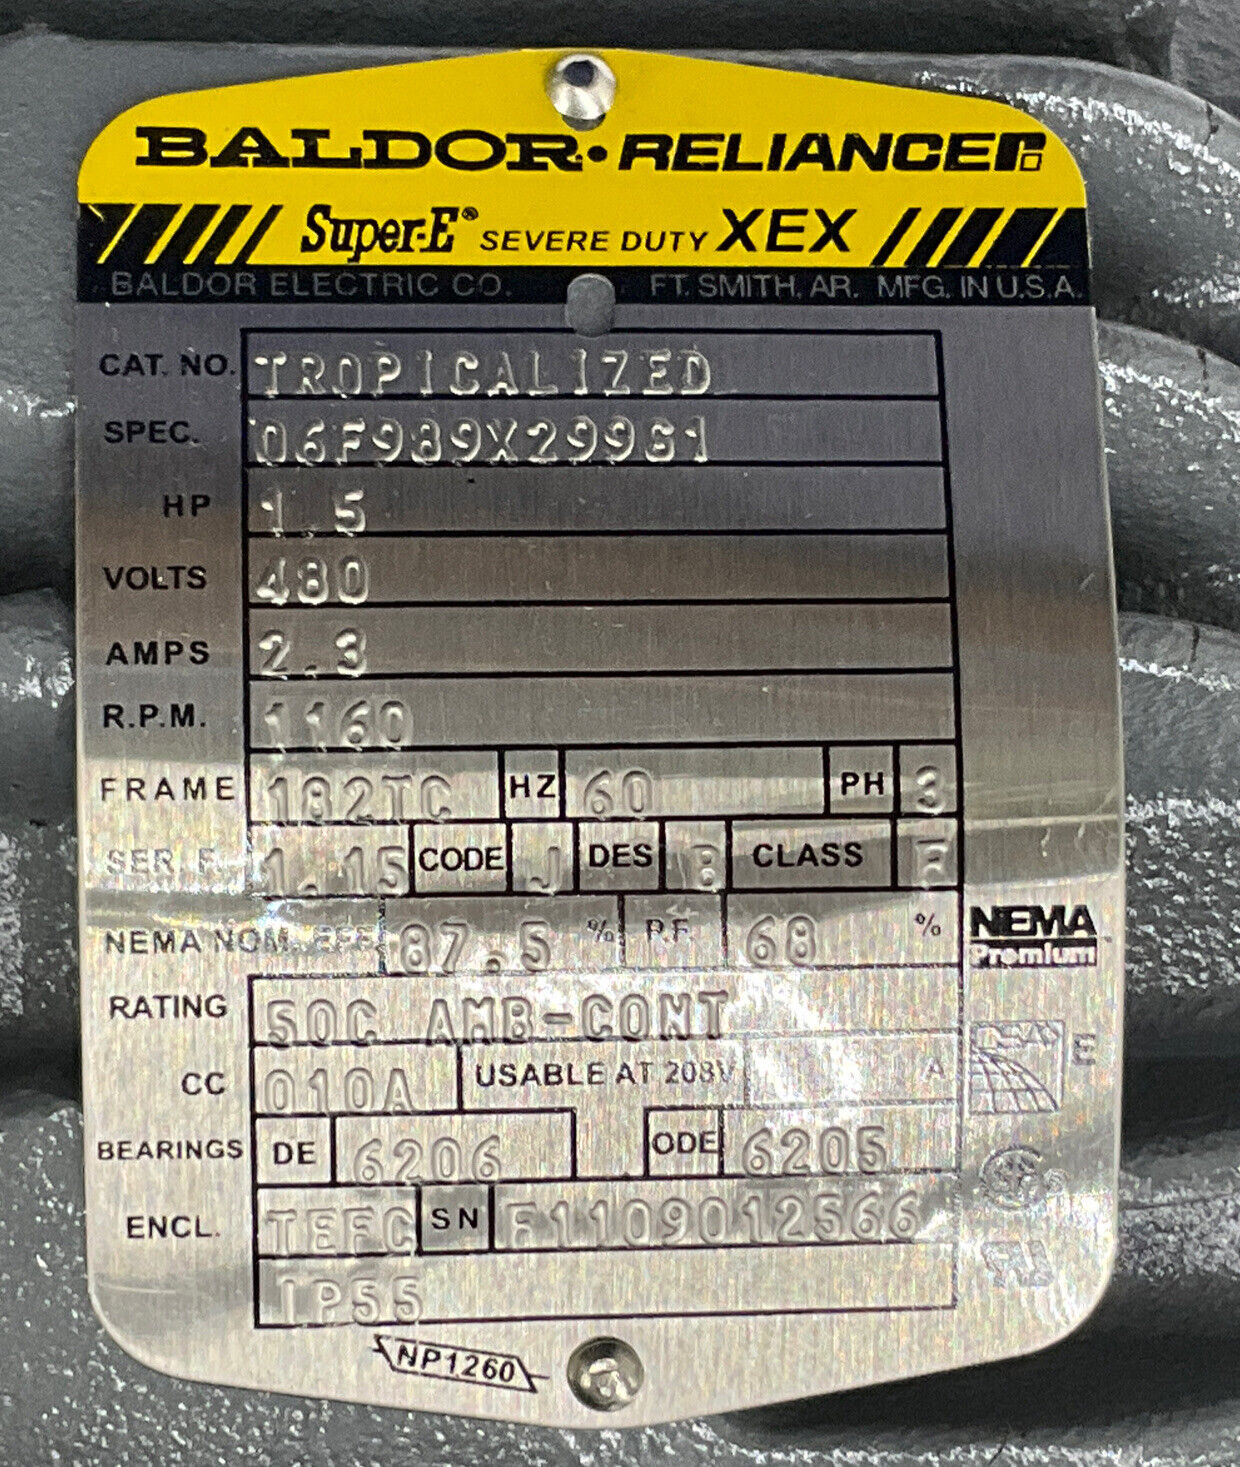 Baldor 06F989X299G1 1.5 HP Industrial Motor, 1160 RPM Frame 182TC, 480V (OV119)